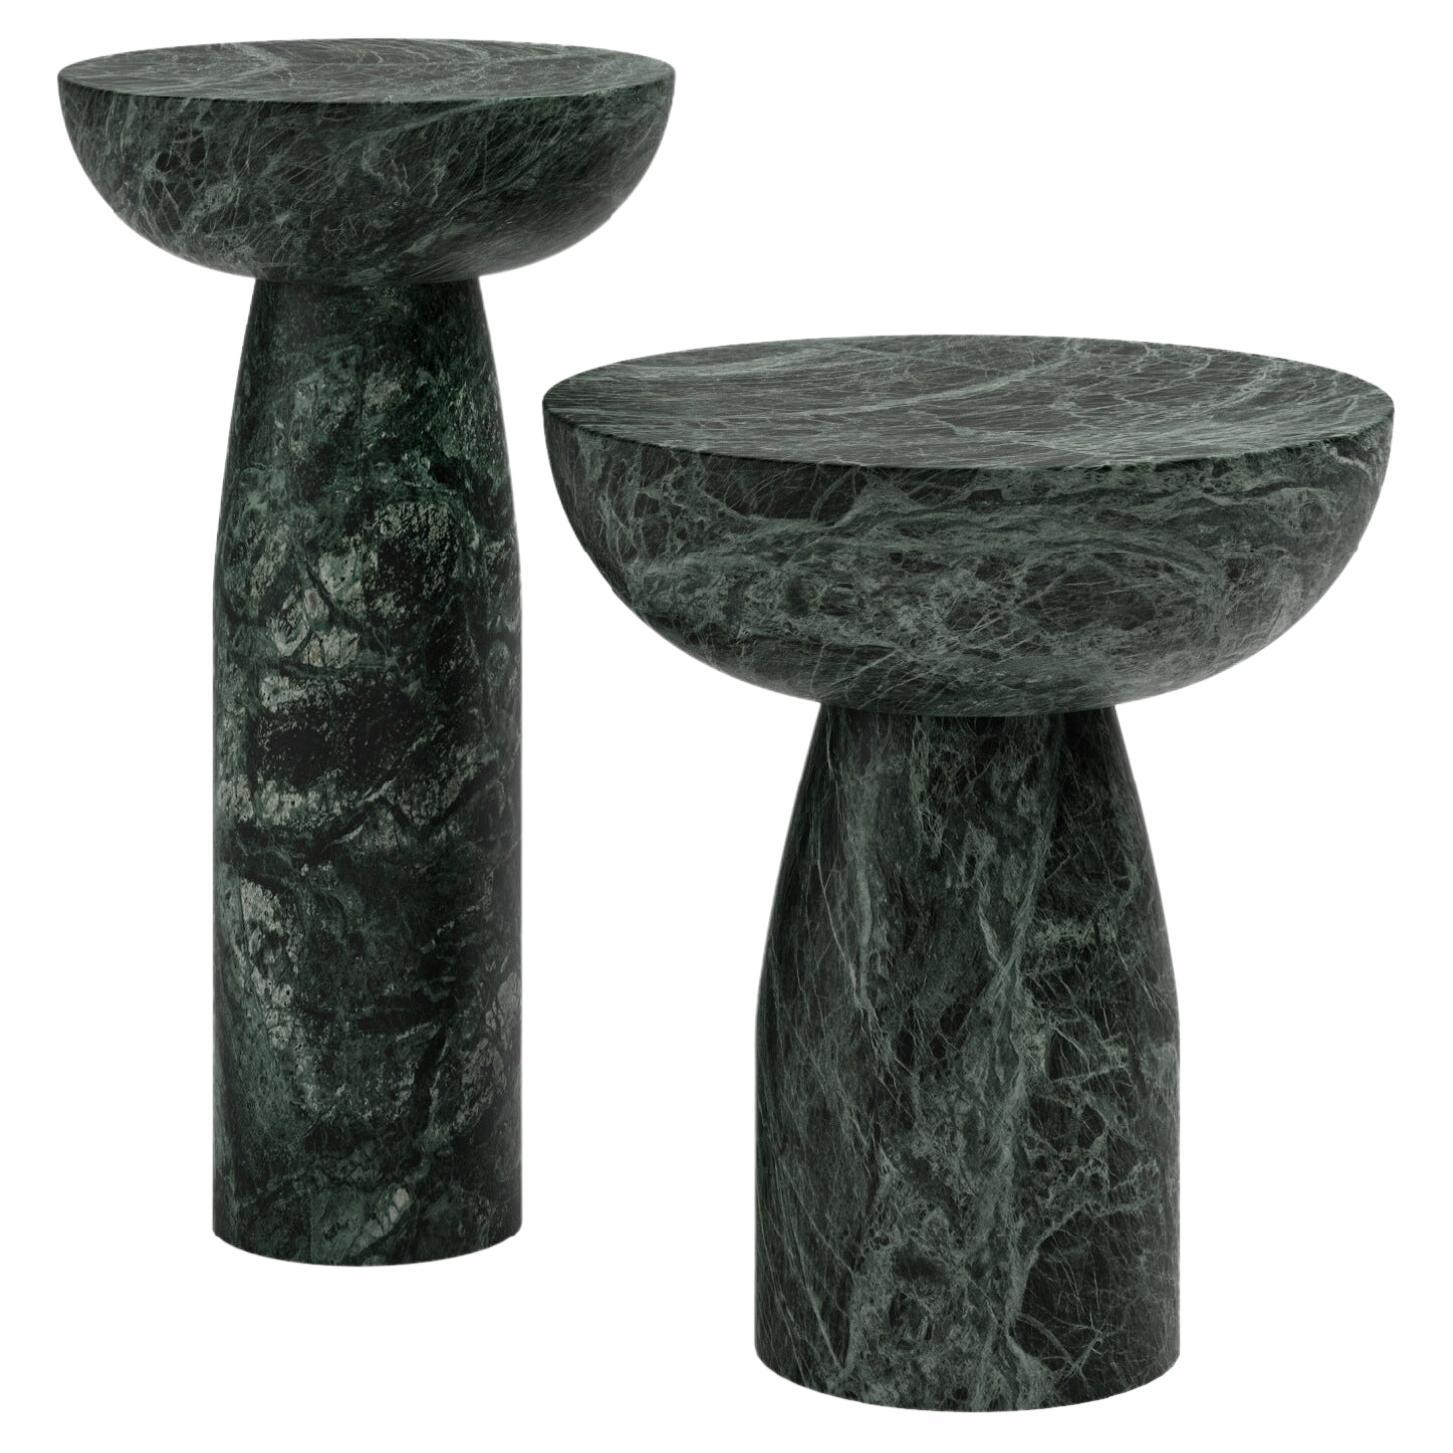 FORM(LA) Sfera Round Side Table 14”L x 14”W x 26”H Verde Guatemala Marble For Sale